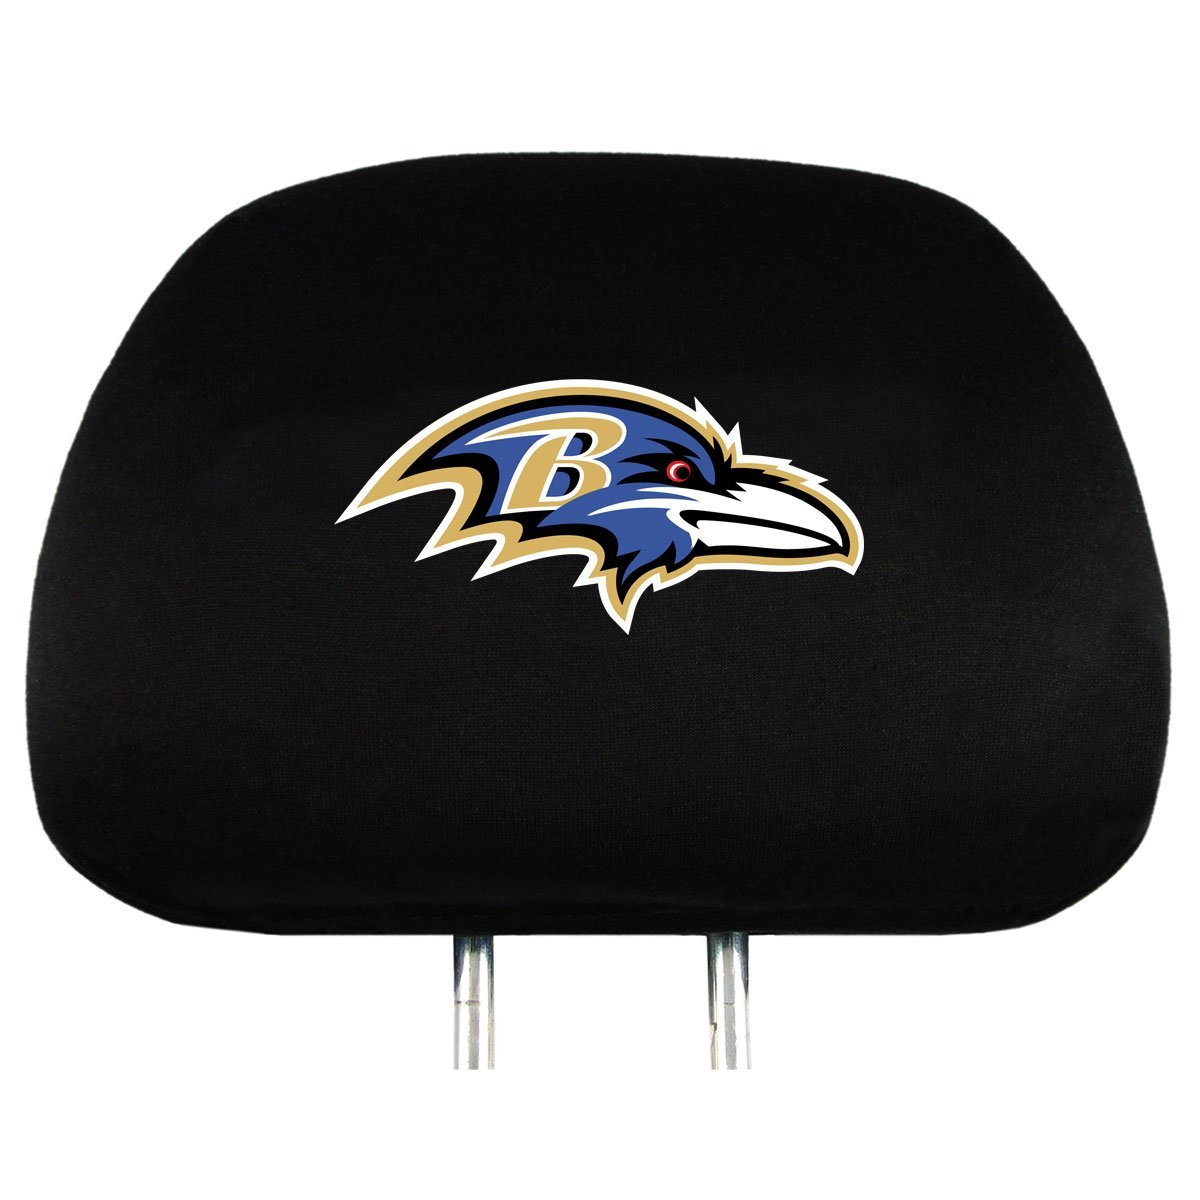 Baltimore Ravens Headrest Covers (2)